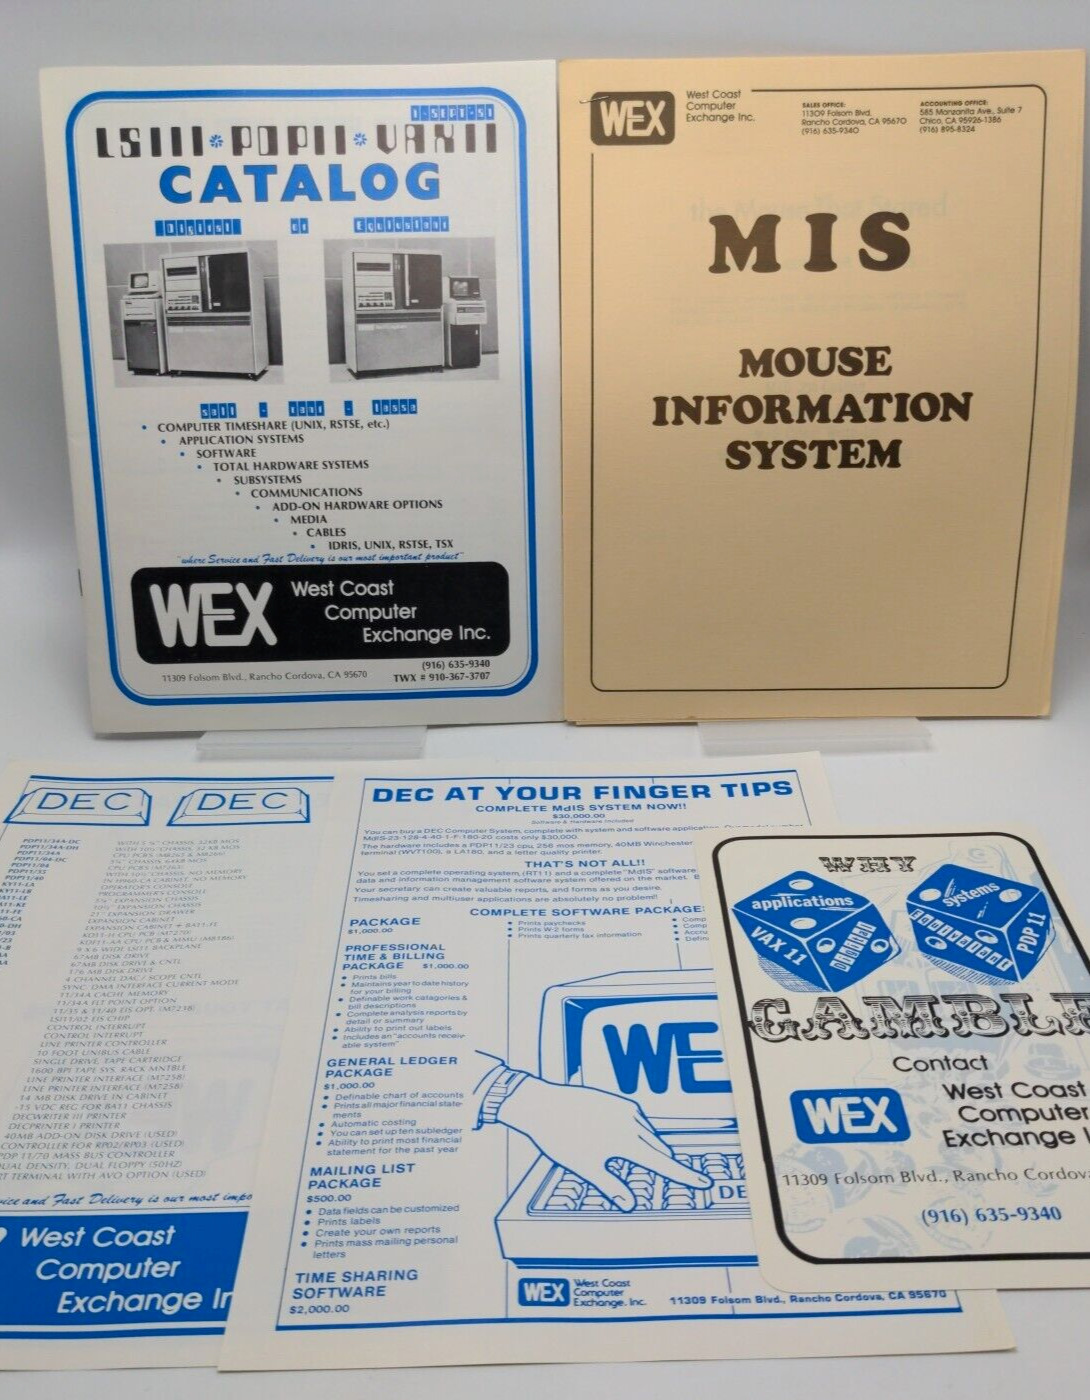 WEX WEST COAST COMPUTER EXCHANGE 1980s Vintage Product Catalog Advertising DEC